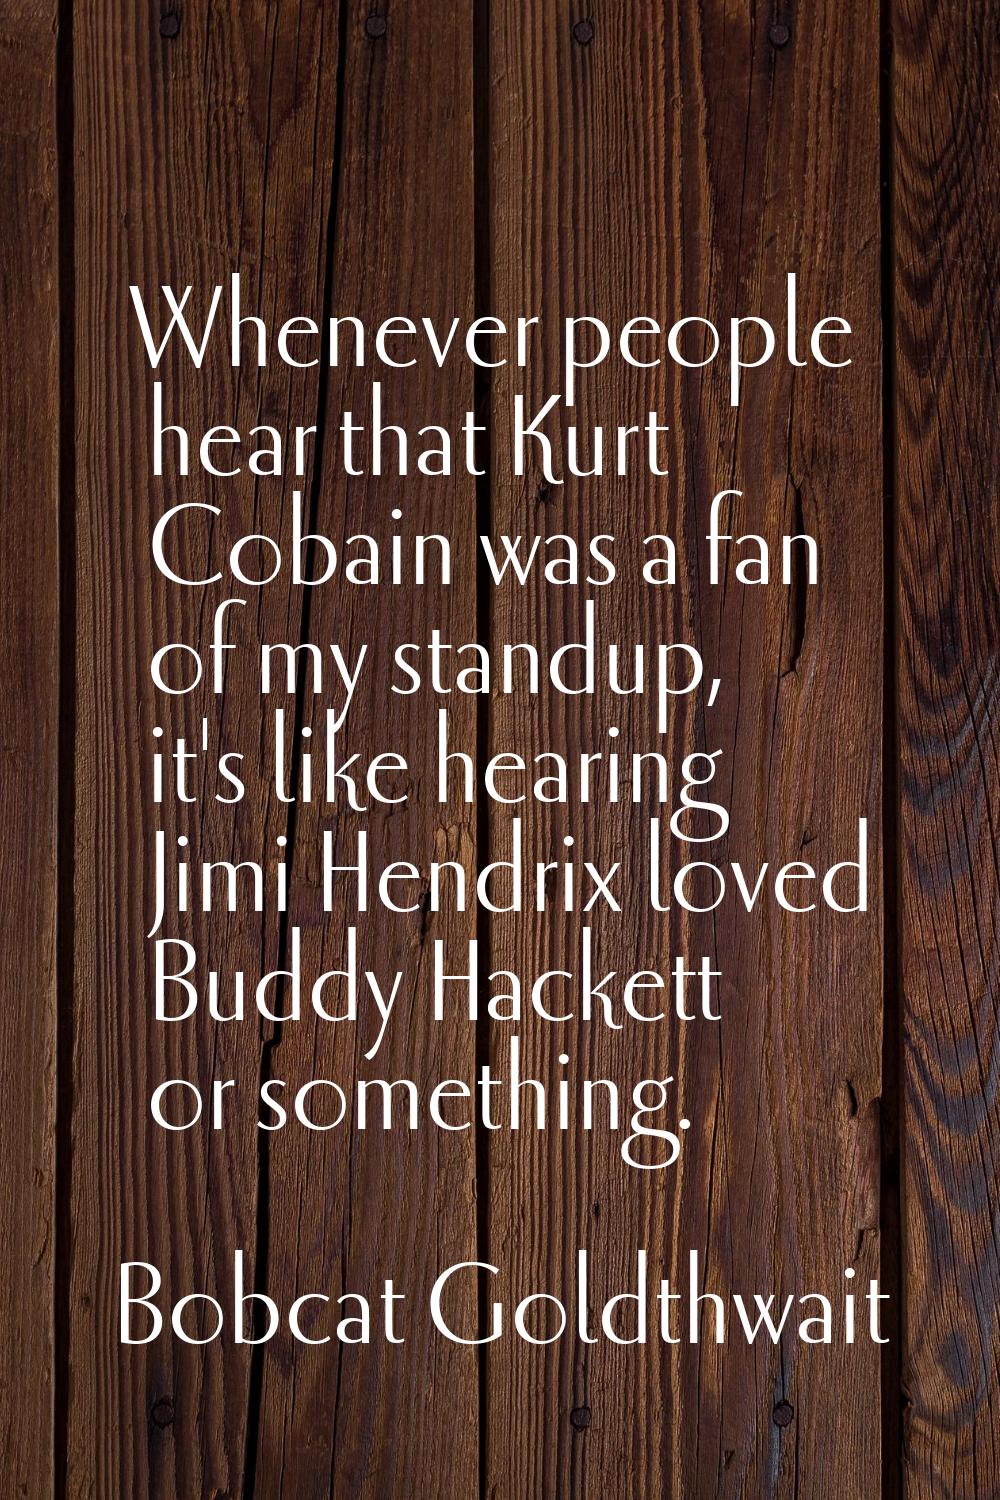 Whenever people hear that Kurt Cobain was a fan of my standup, it's like hearing Jimi Hendrix loved